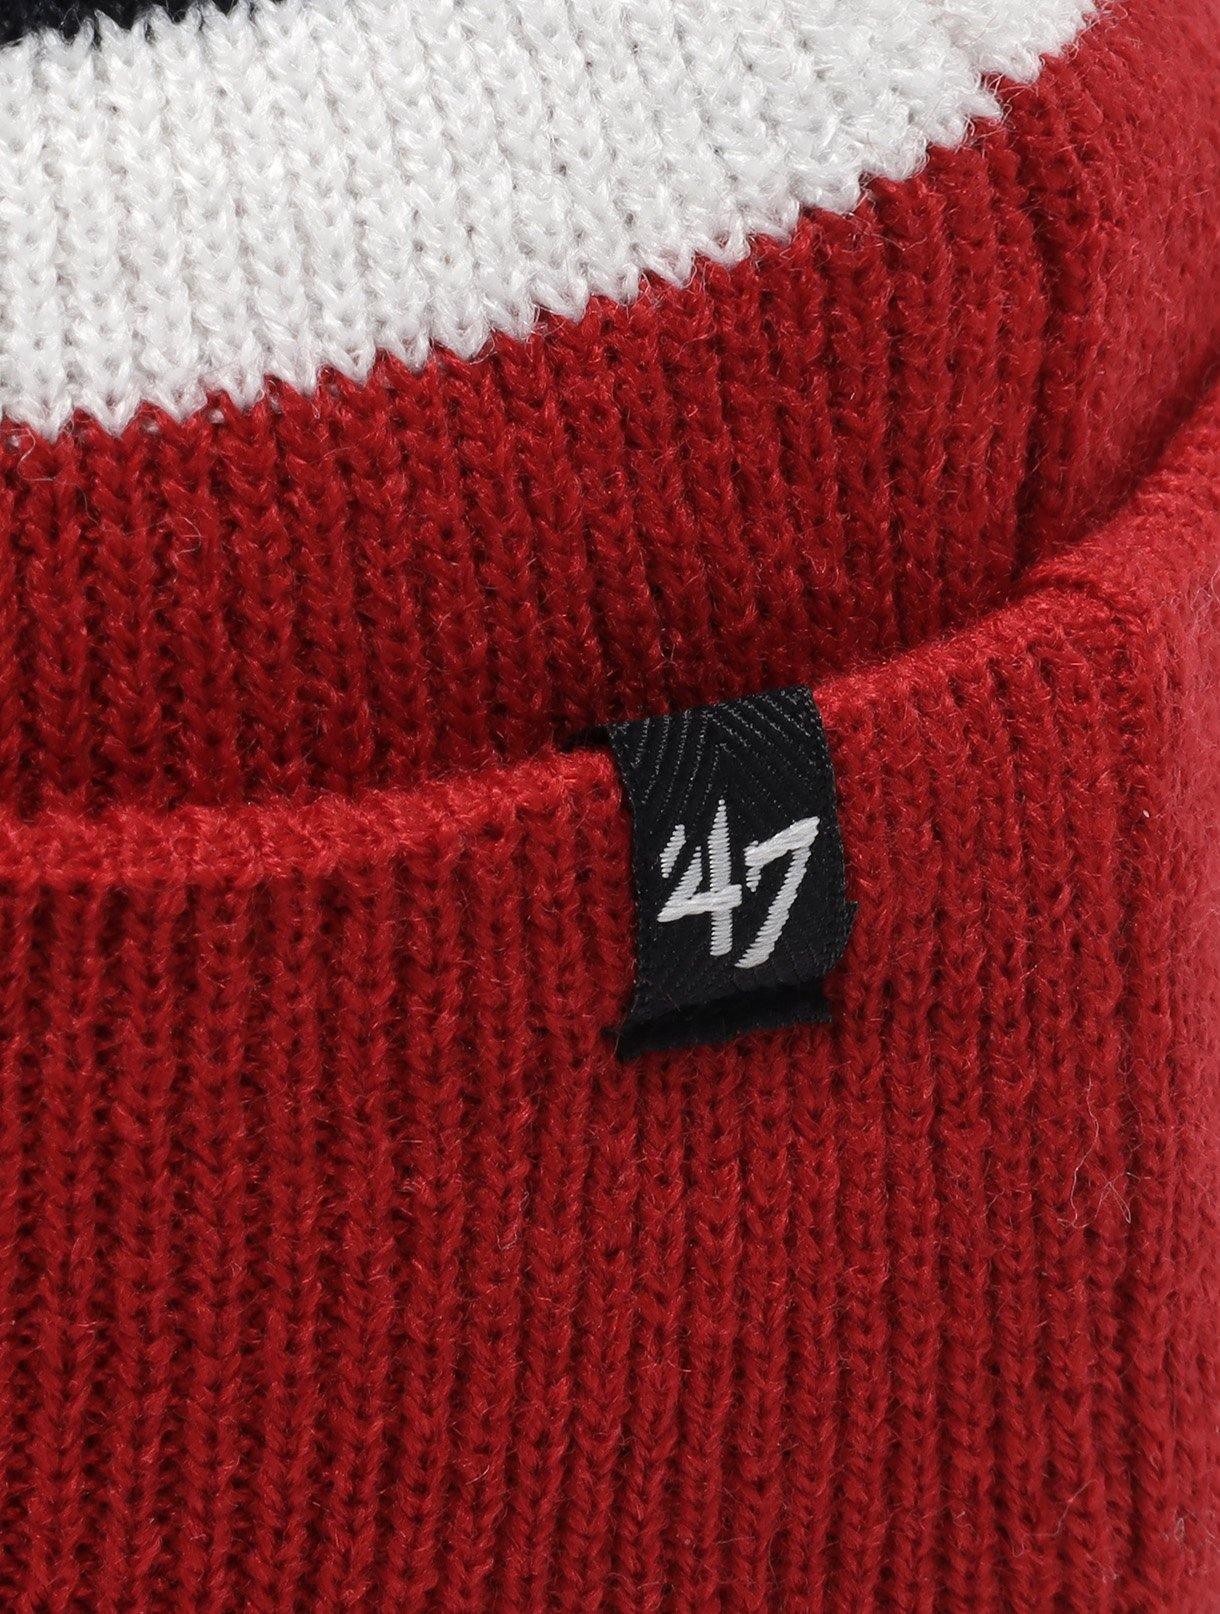 Brand 47 Boston Red Sox Breakaway Cuff Knit Pom Beanie - Challenger Streetwear